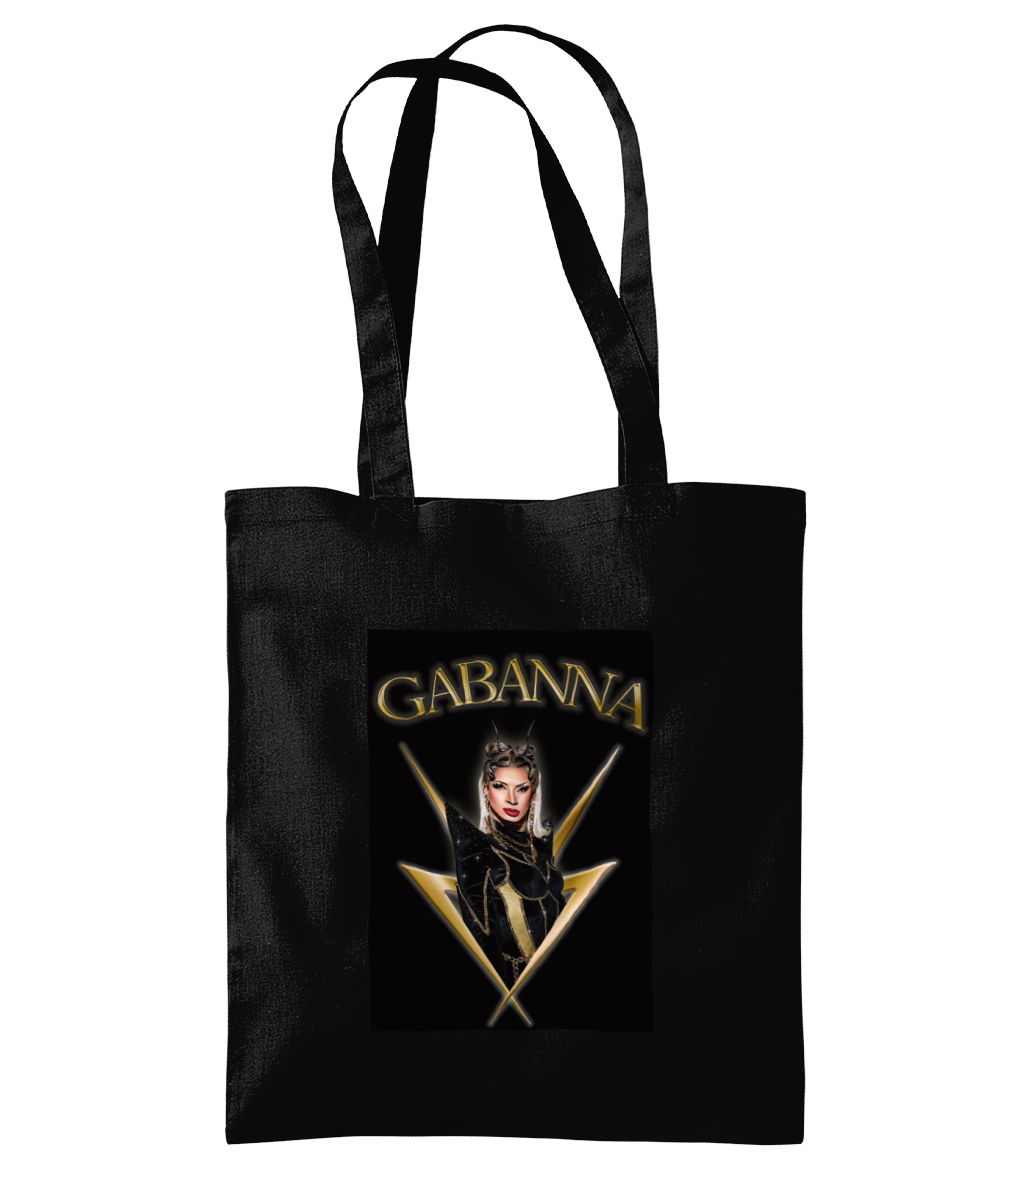 Gabanna - Black & Gold Tote Bag